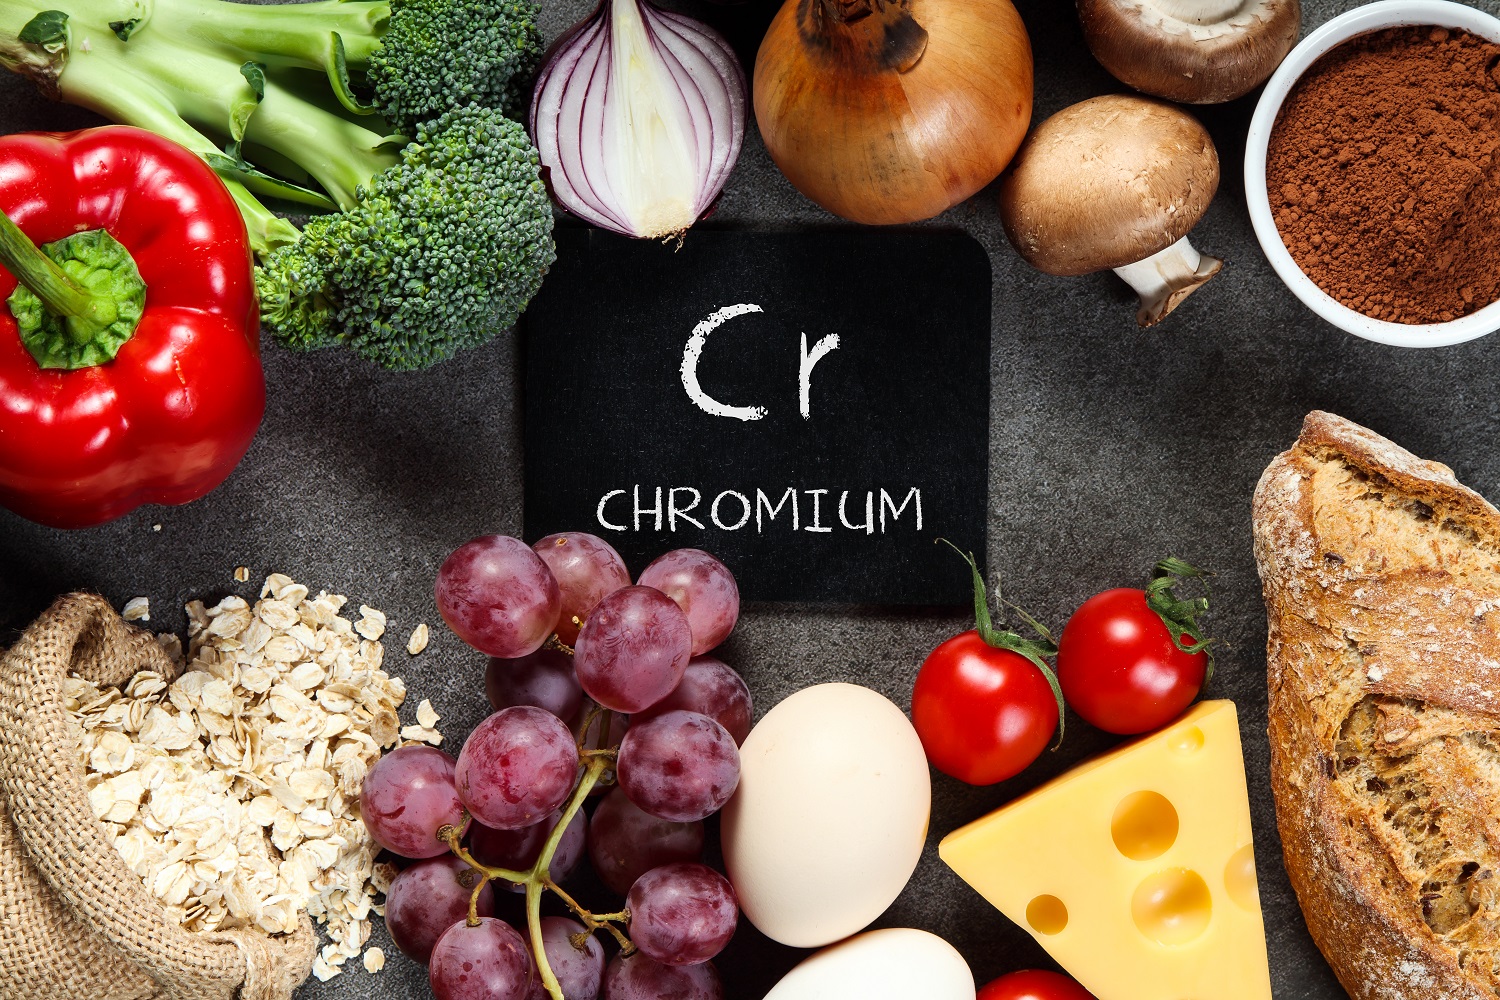 Benefits of chromium